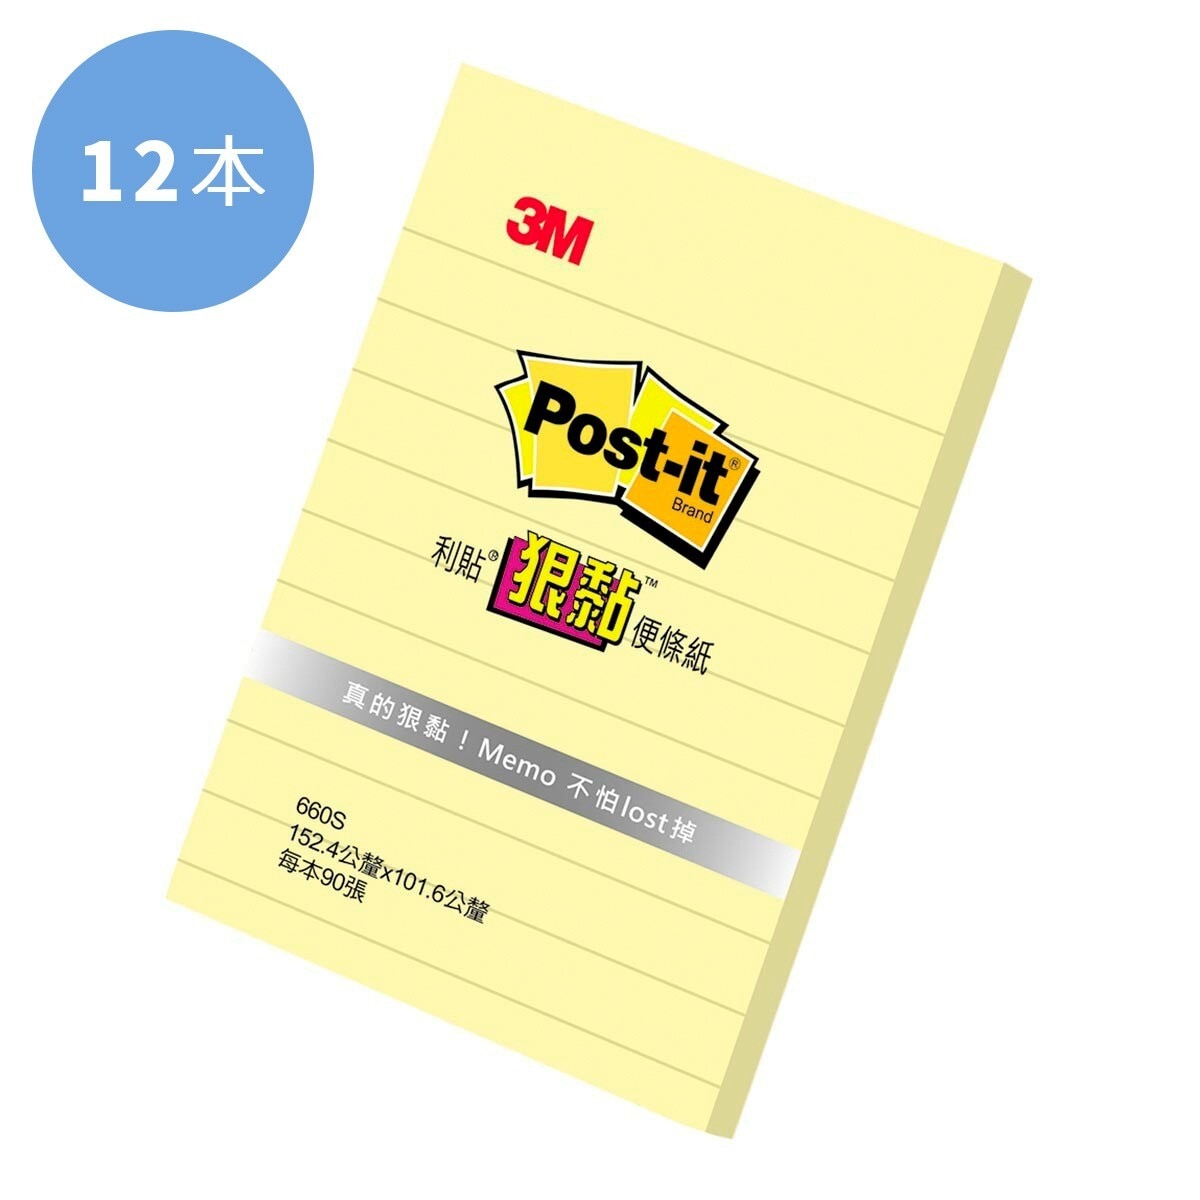 3M Post-it 狠黏橫格便條紙黃色 101.6公釐 X 152.4公釐 X 12本 660S-1